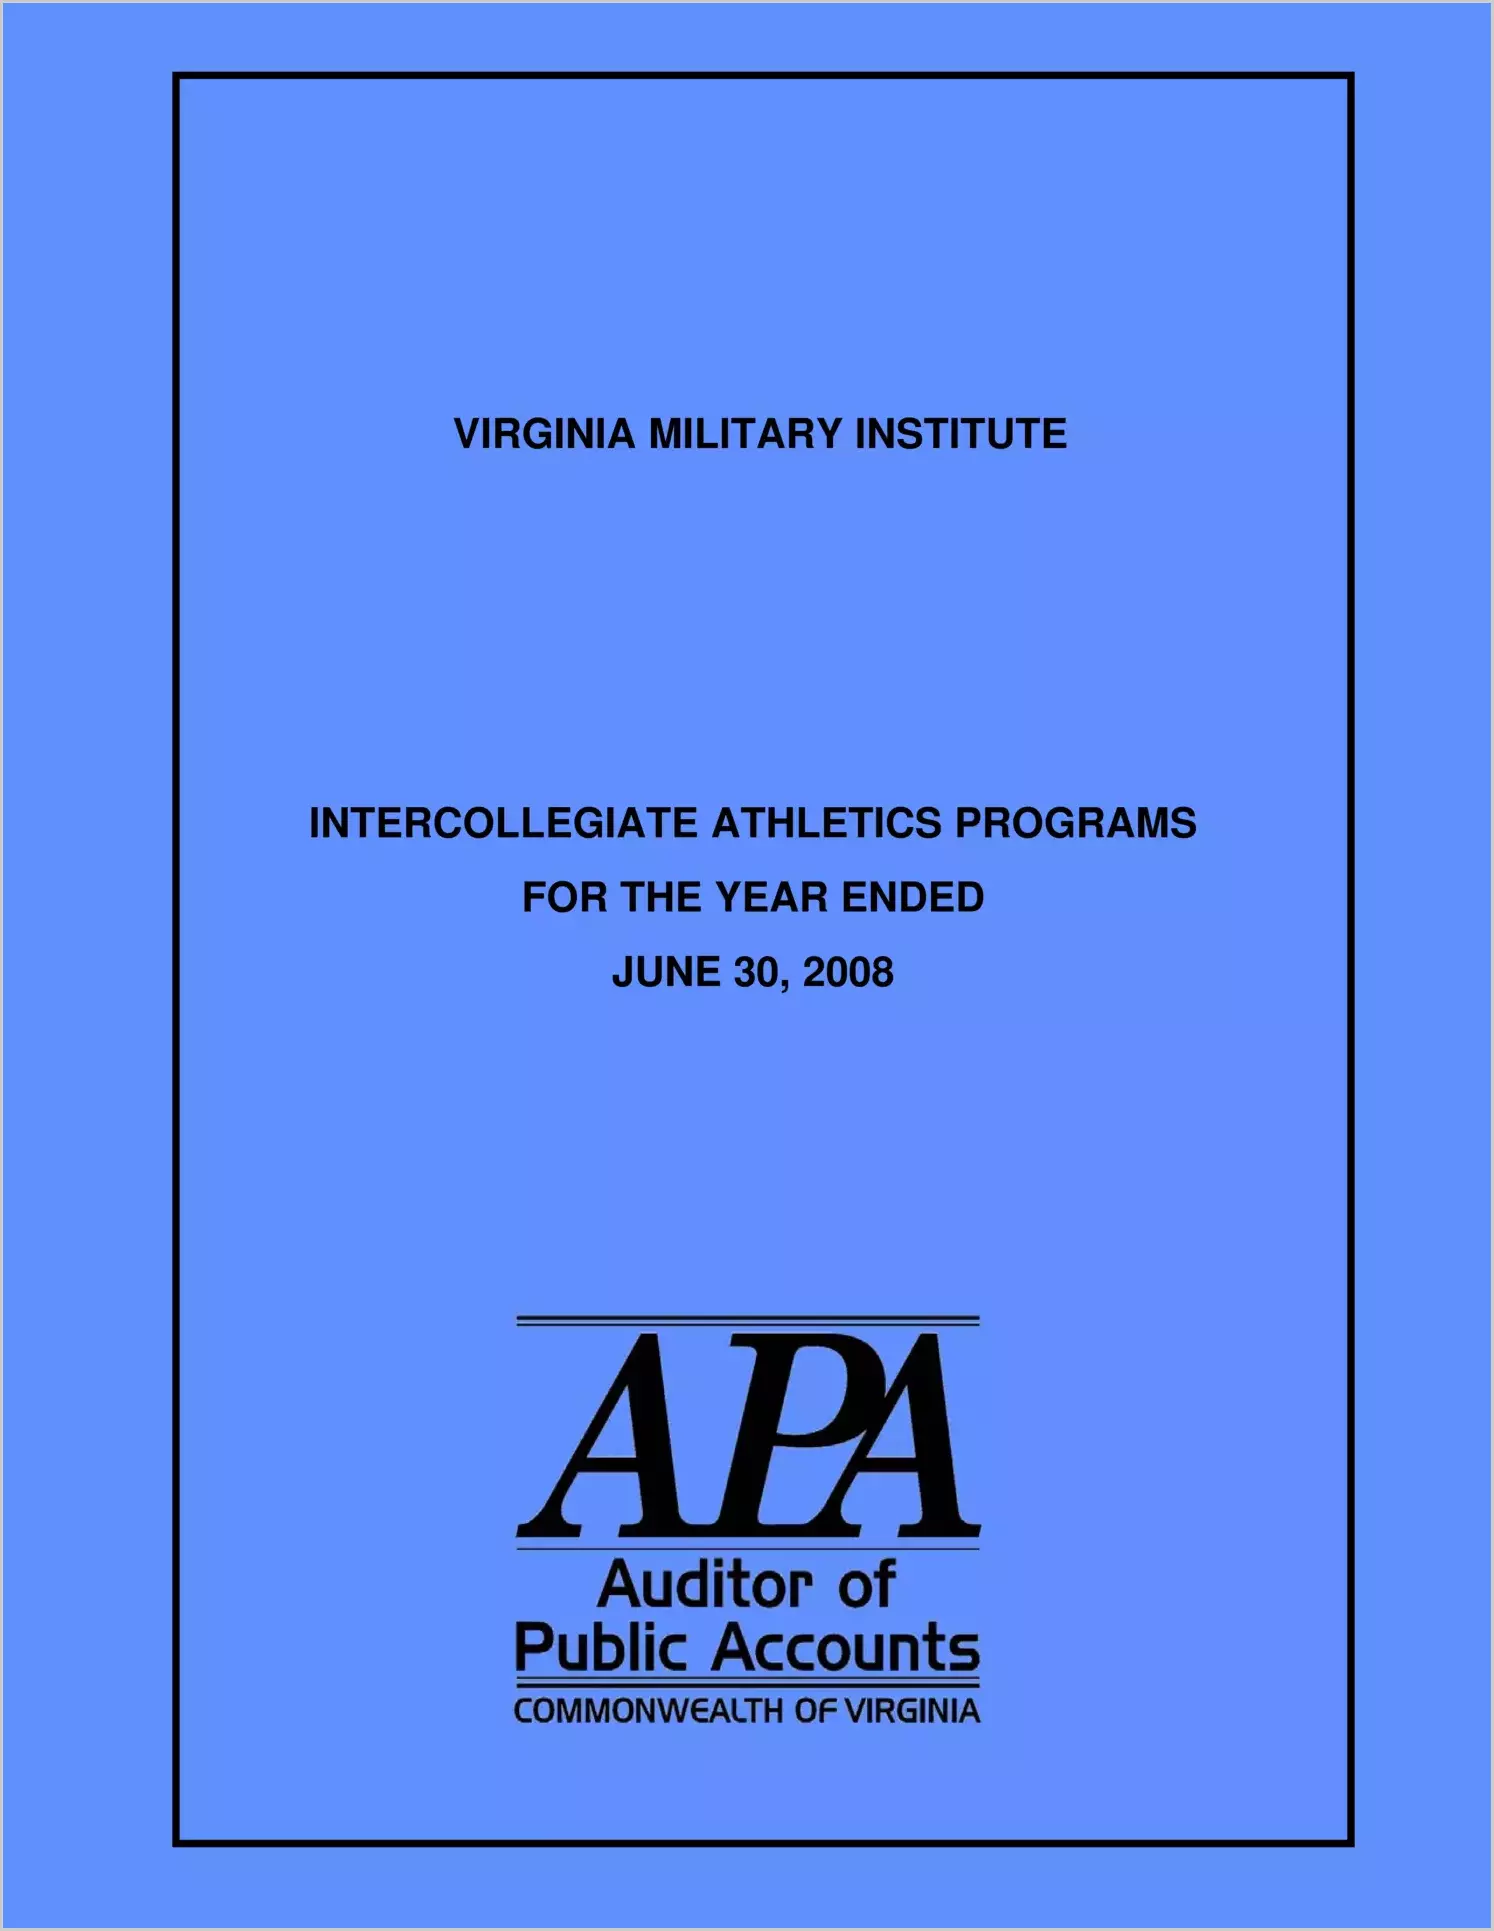 Virginia Military Institute Intercollegiate Athletics Programs for the year ended June 30, 2008